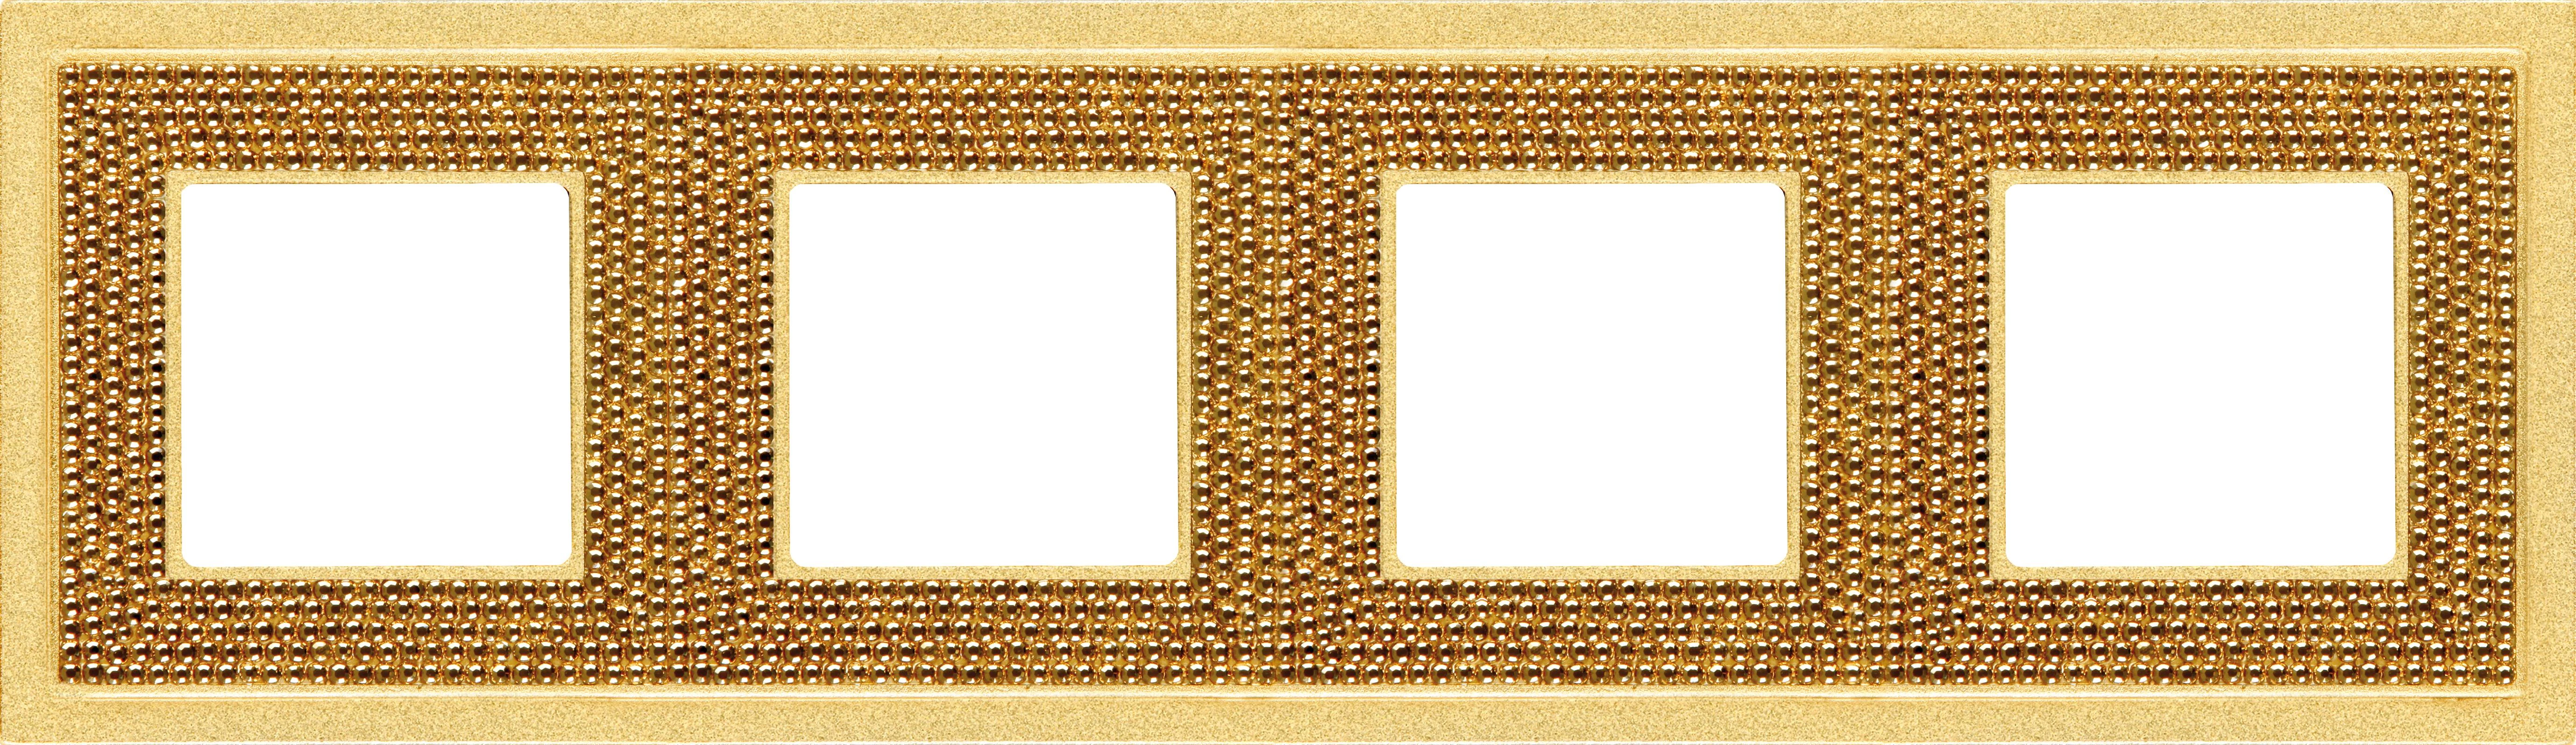  артикул FD01294OR название Рамка четверная, цвет Красное золото, Crystal De Luxe Art, Fede